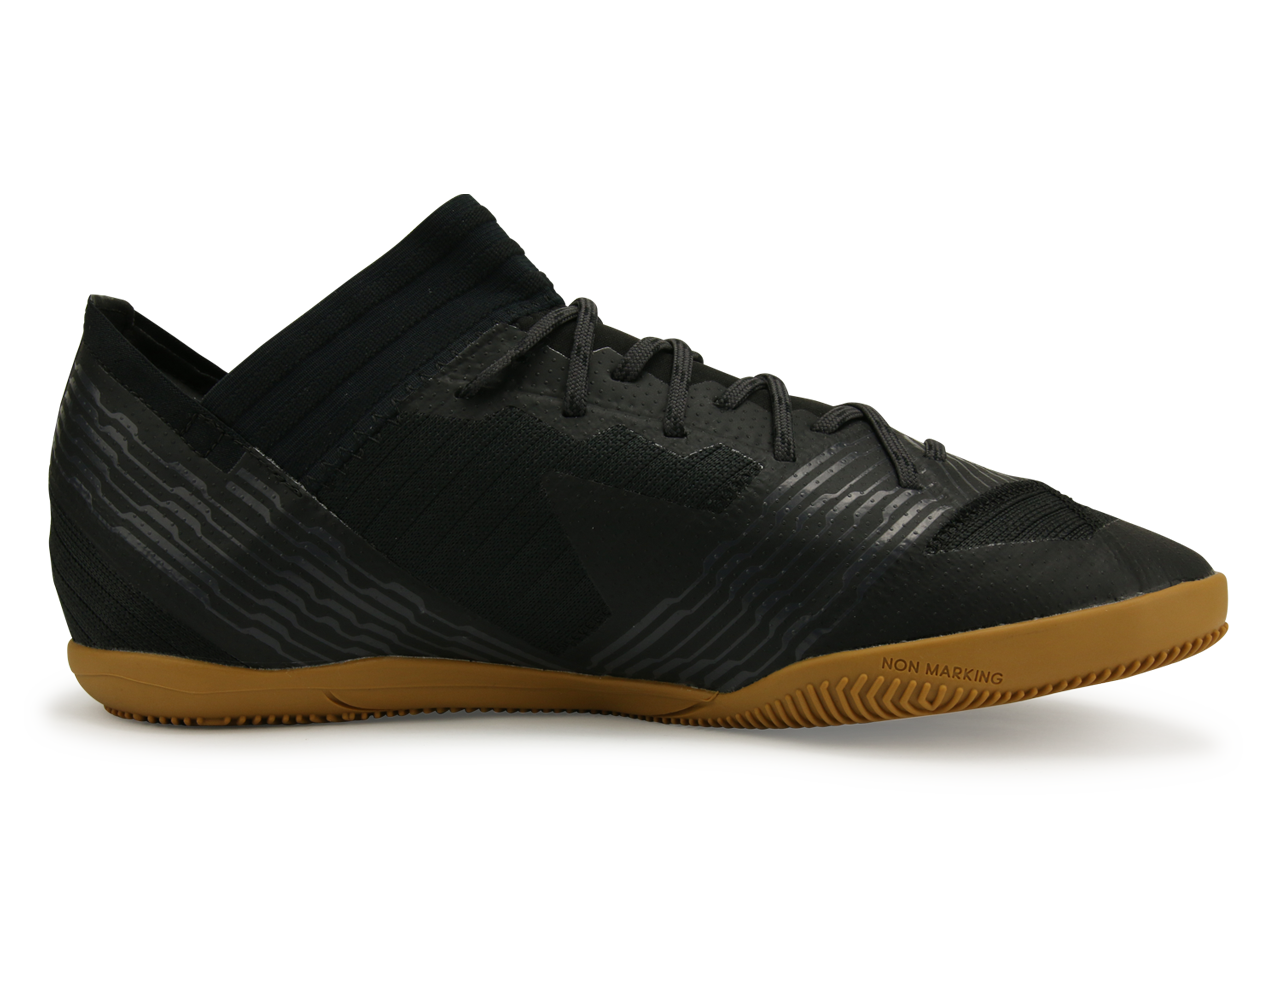 adidas Men's Nemeziz Messi Tango 17.3 Indoor Soccer Shoes Core Black